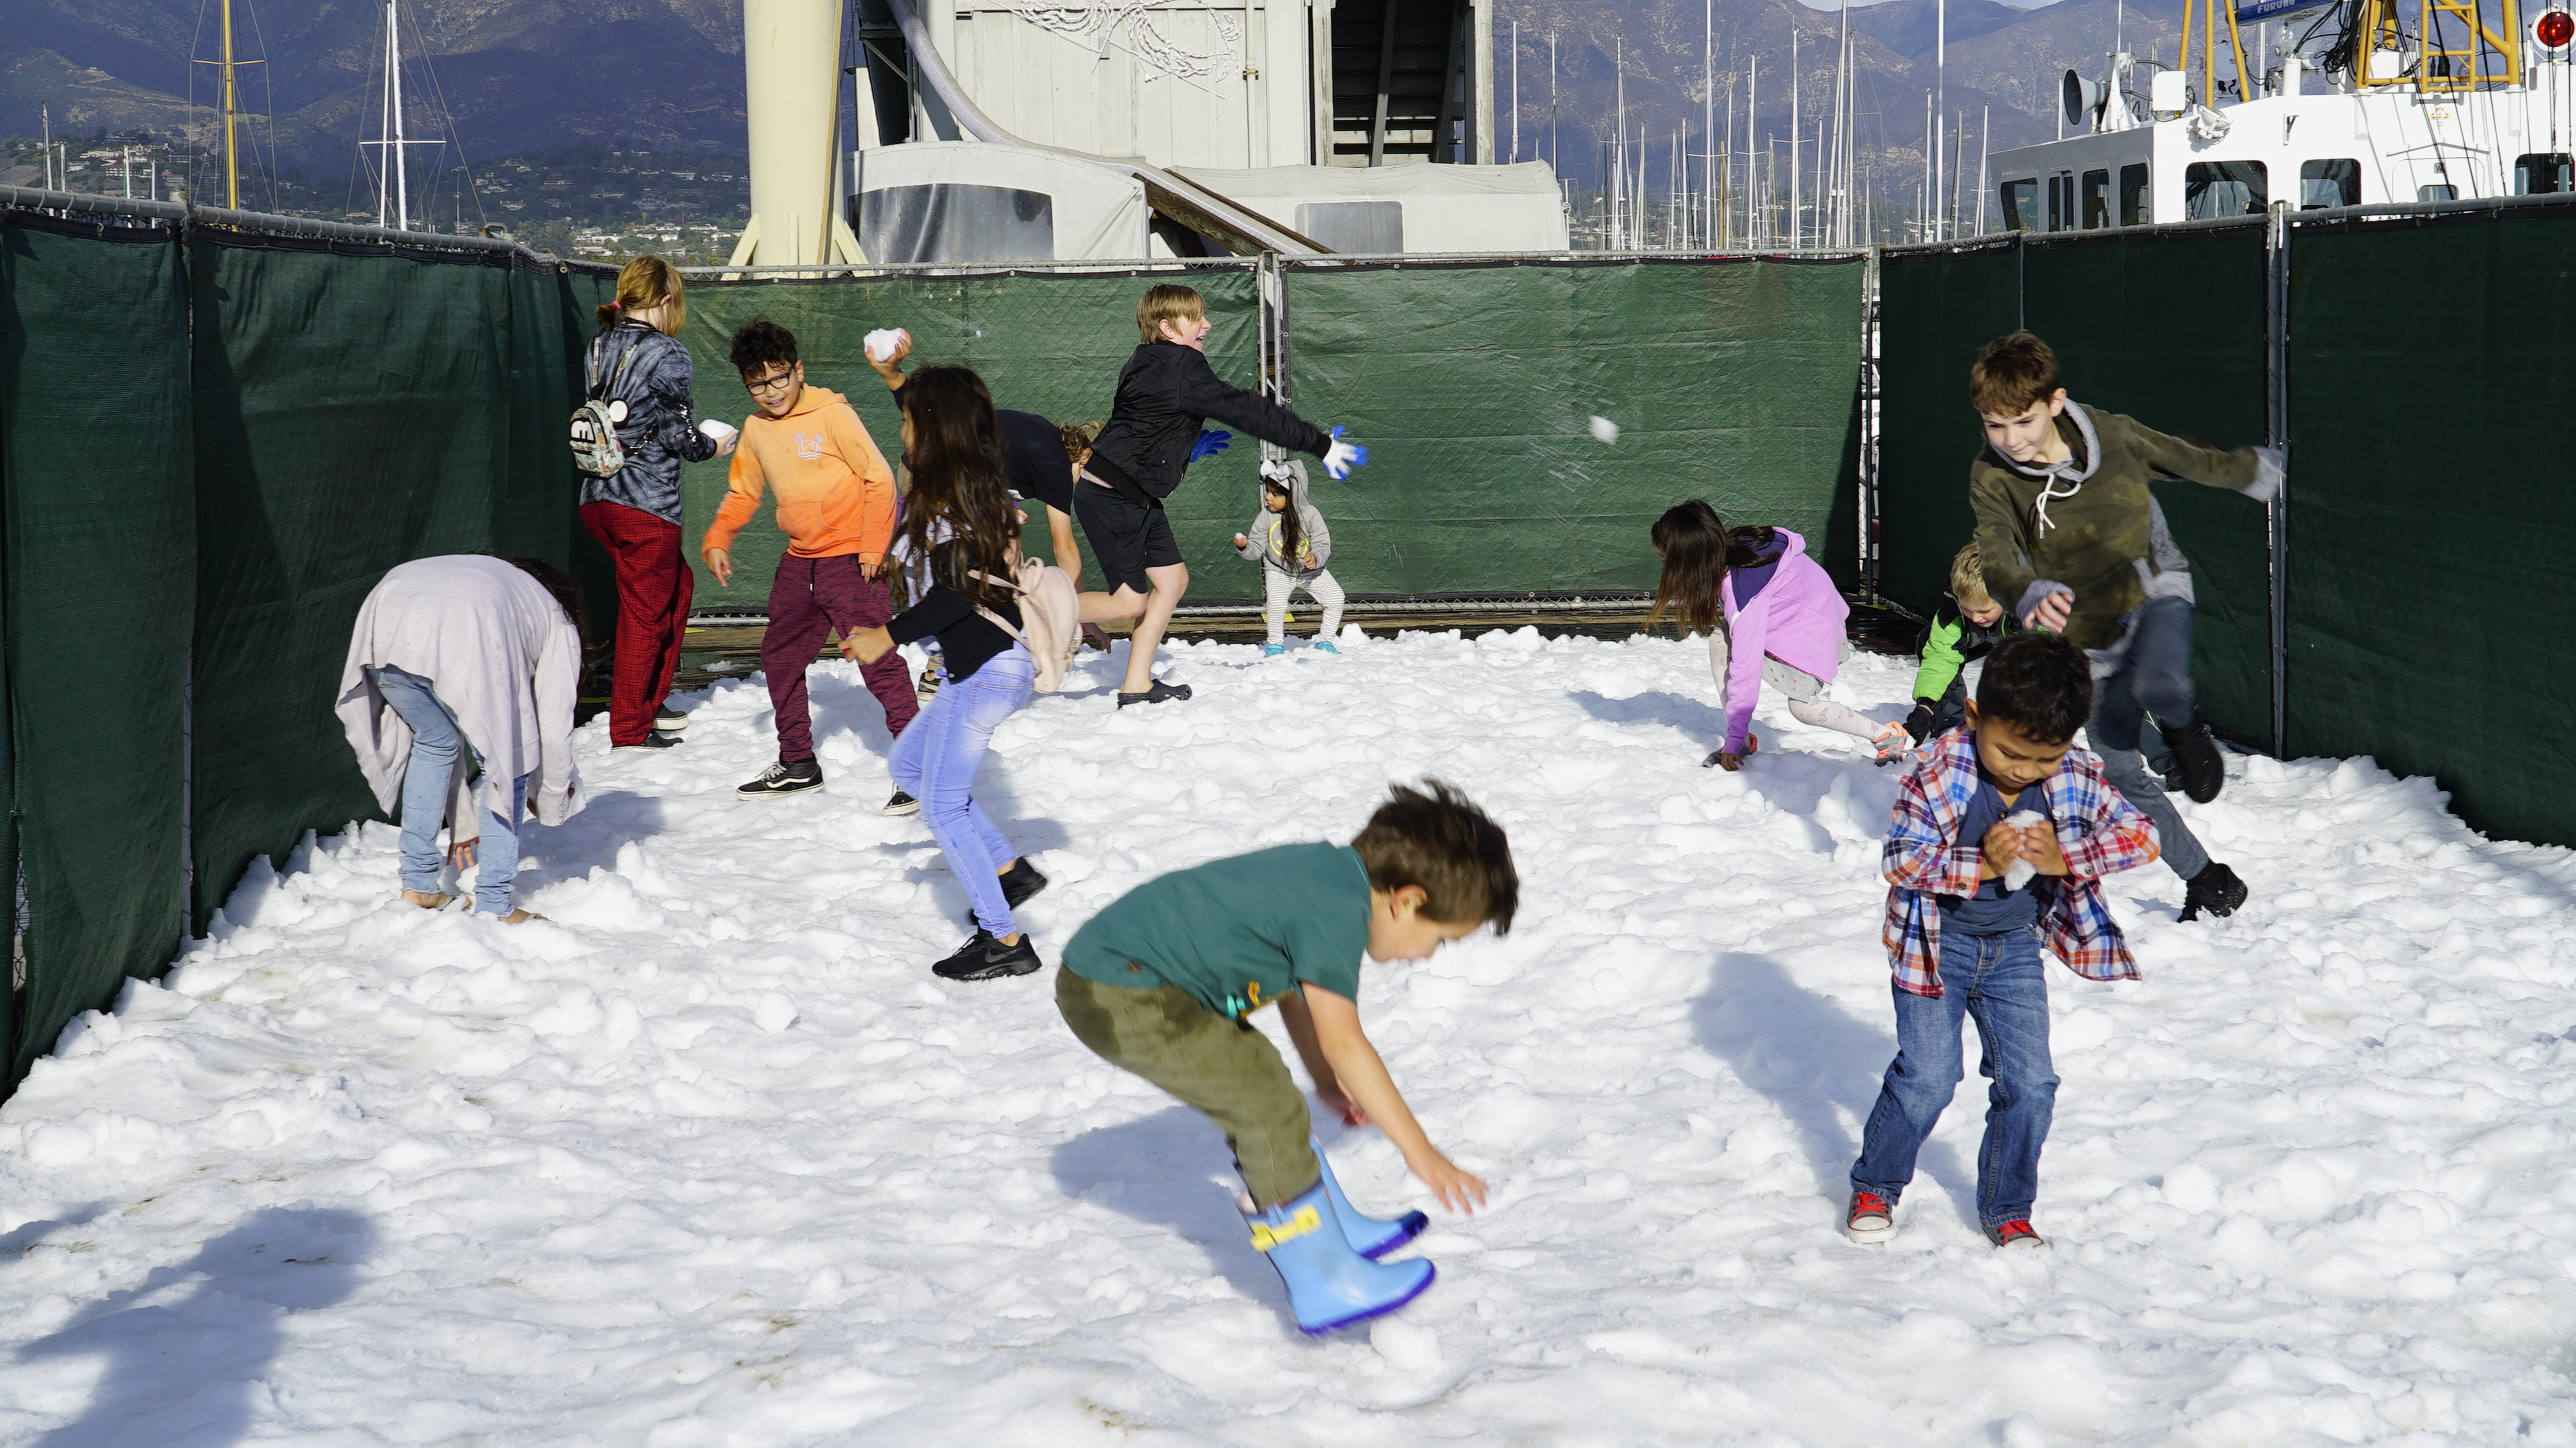 Kids play on snow pile